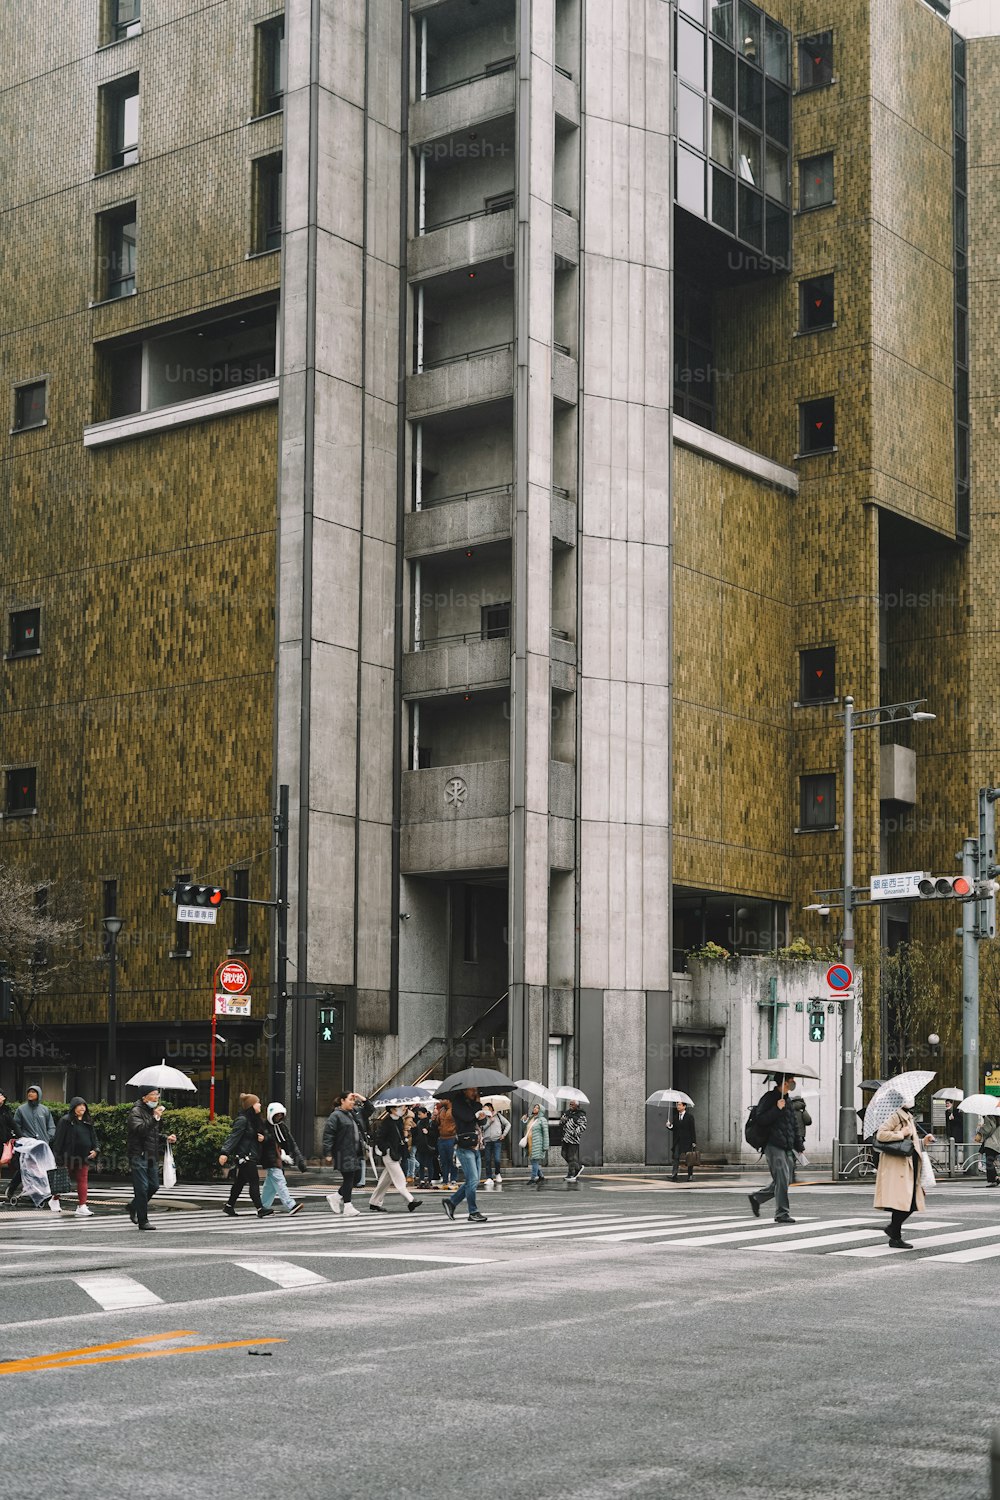 Un grupo de personas cruzando una calle frente a un edificio alto